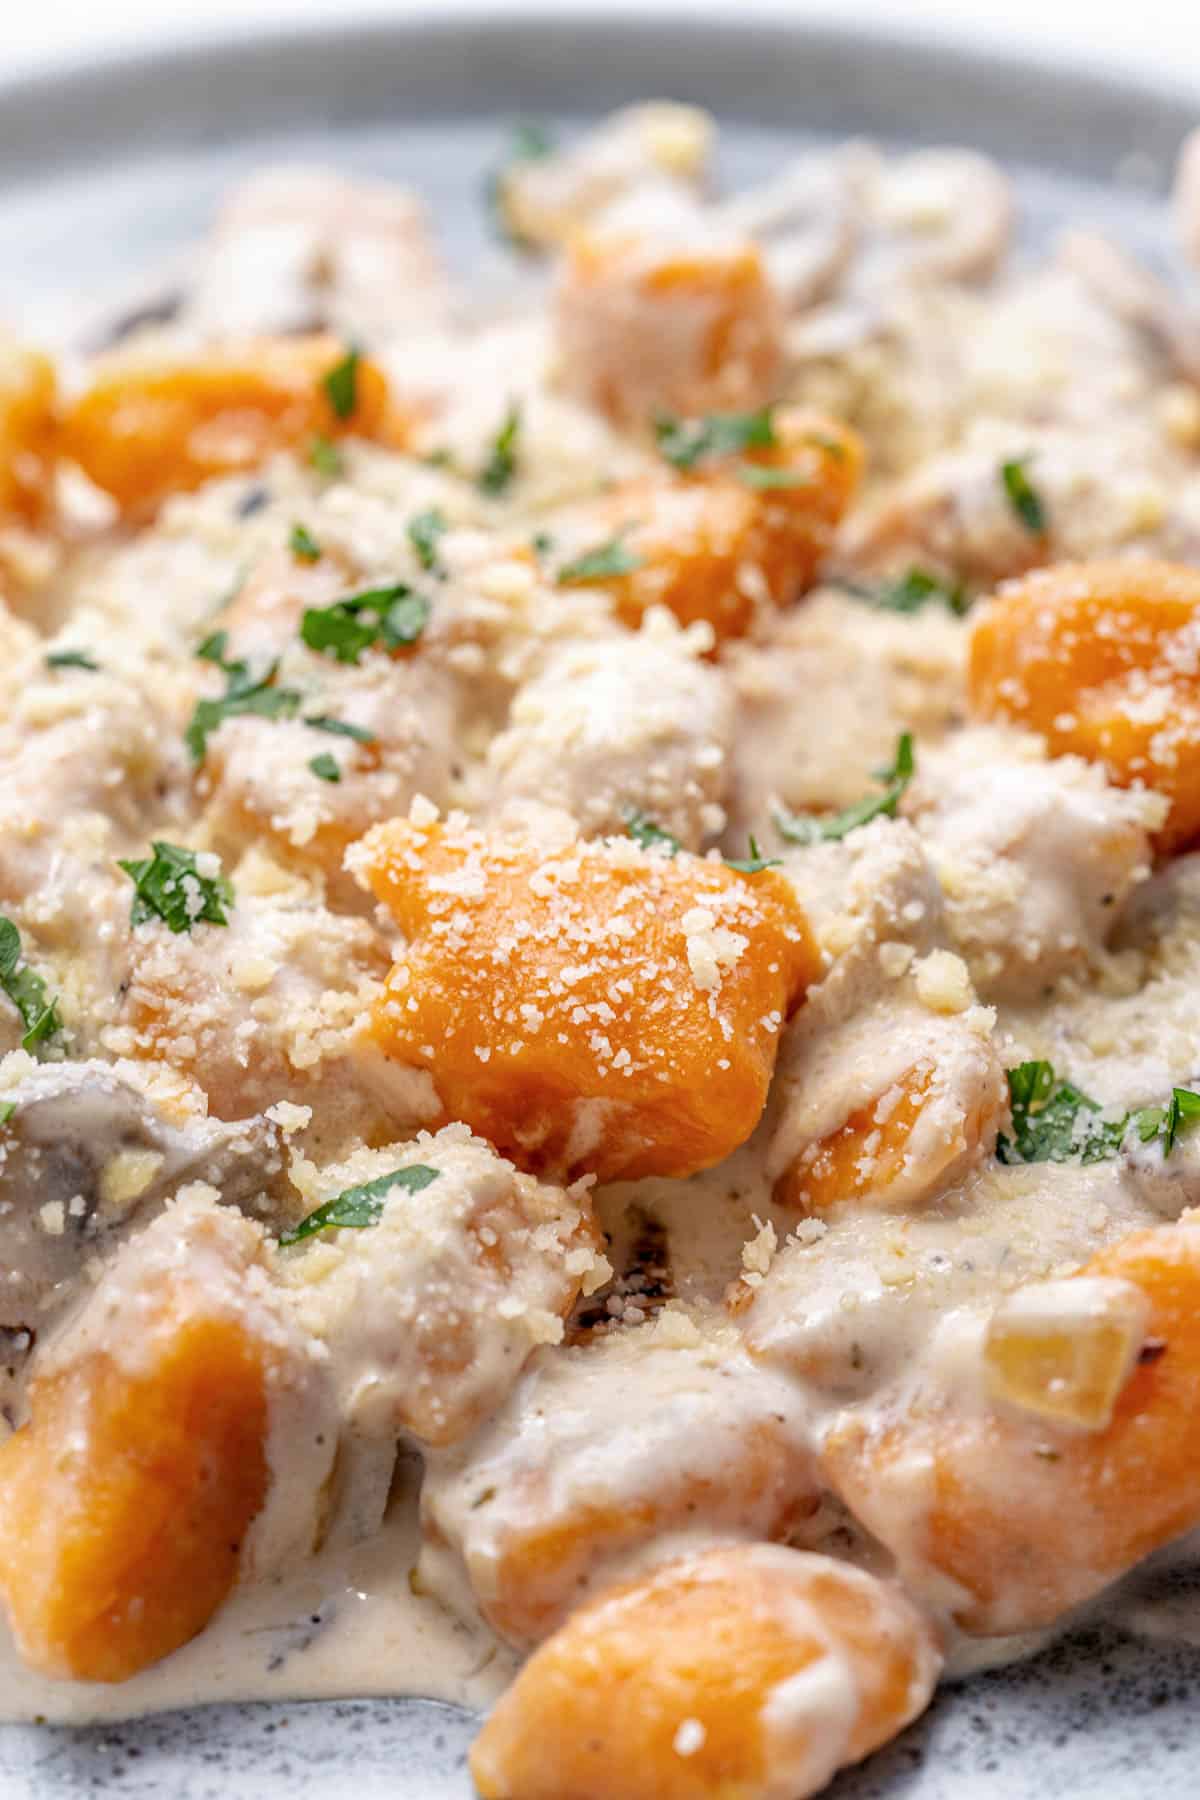 Homemade sweet potato gnocchi with a creamy mushroom sauce.